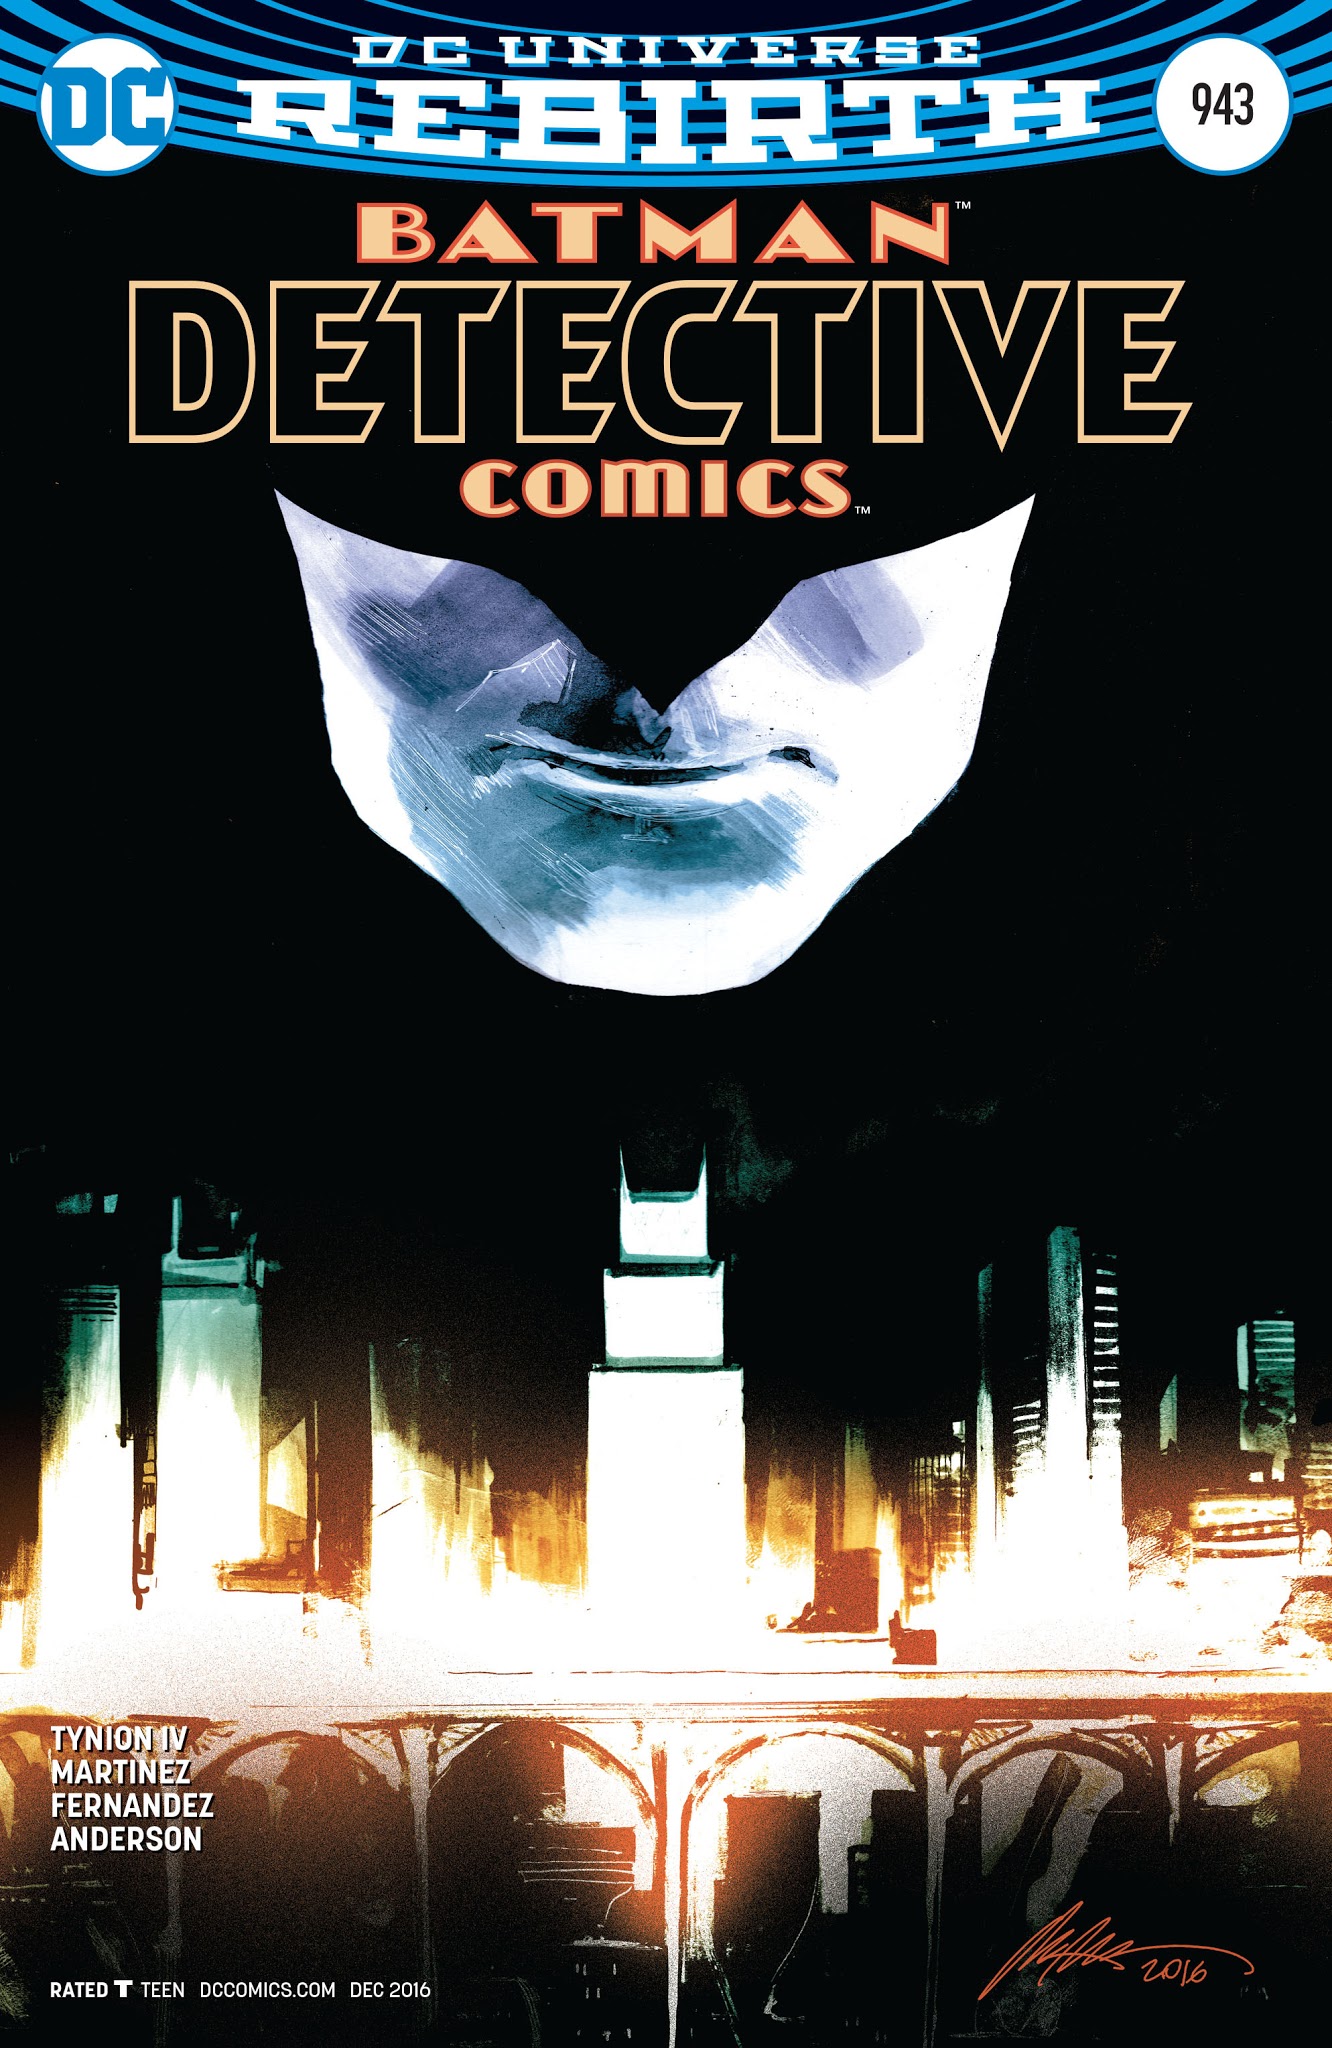 Read online Detective Comics (1937) comic -  Issue #943 - 3